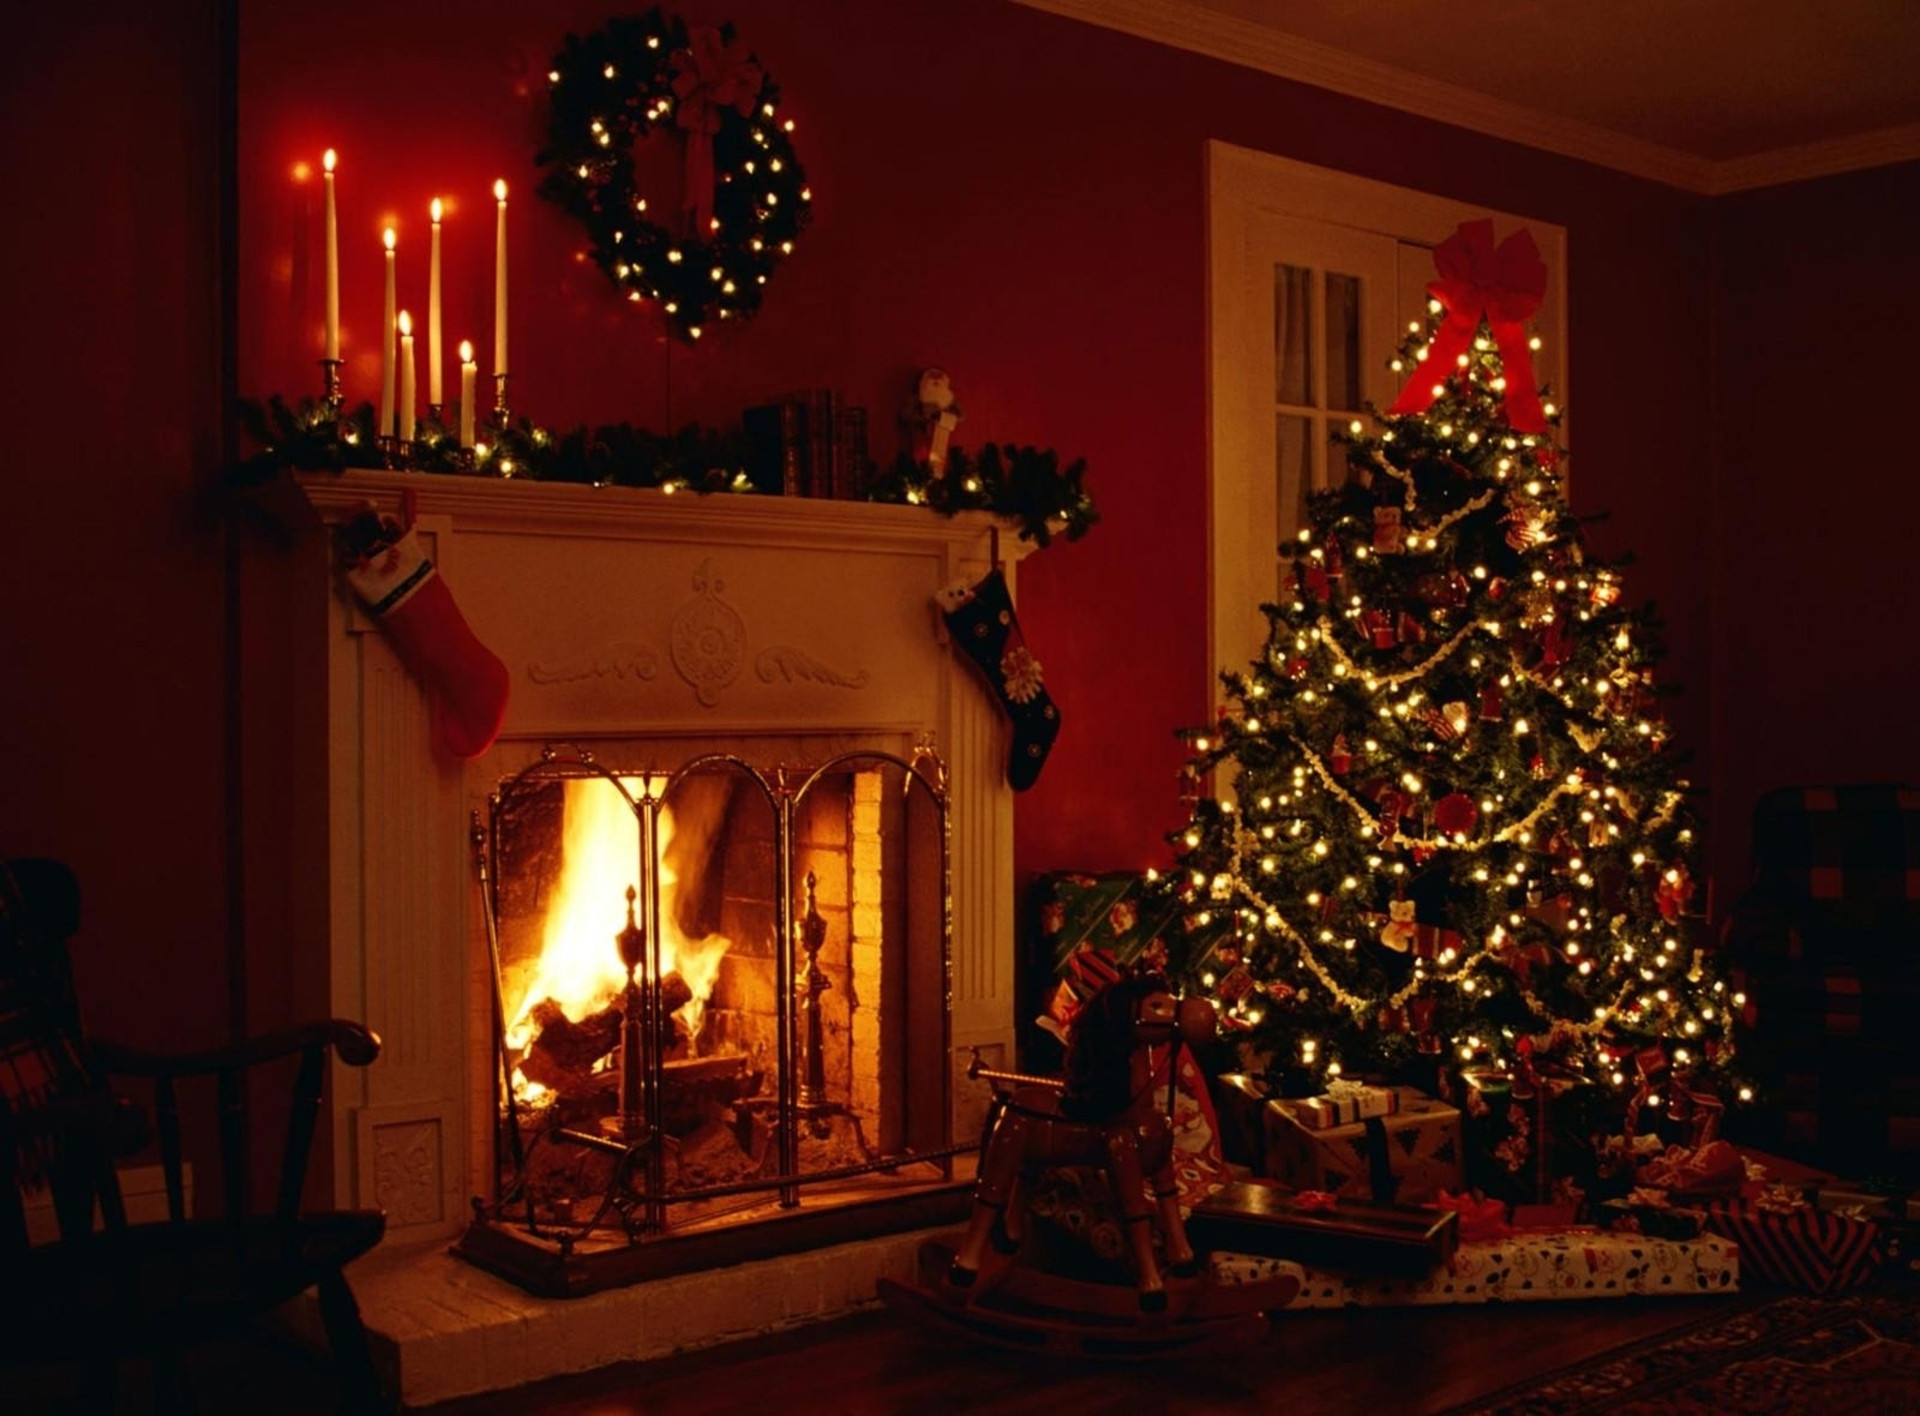 Christmas Wallpaper Fireplace
 Christmas fireplace fire holiday festive decorations u